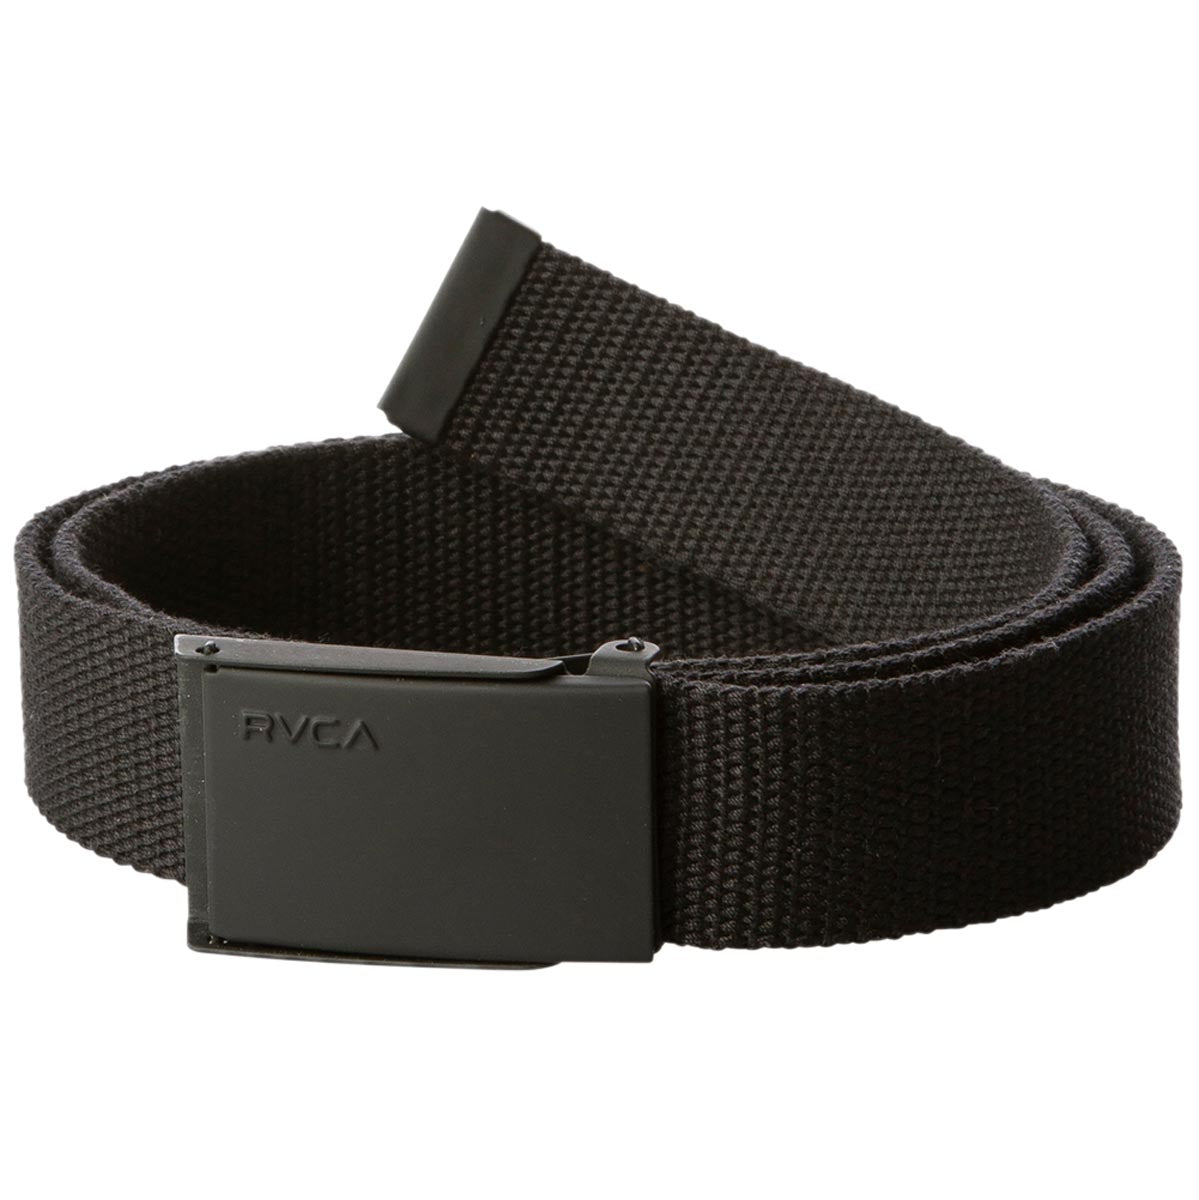 RVCA Options Web Belt - Black image 1